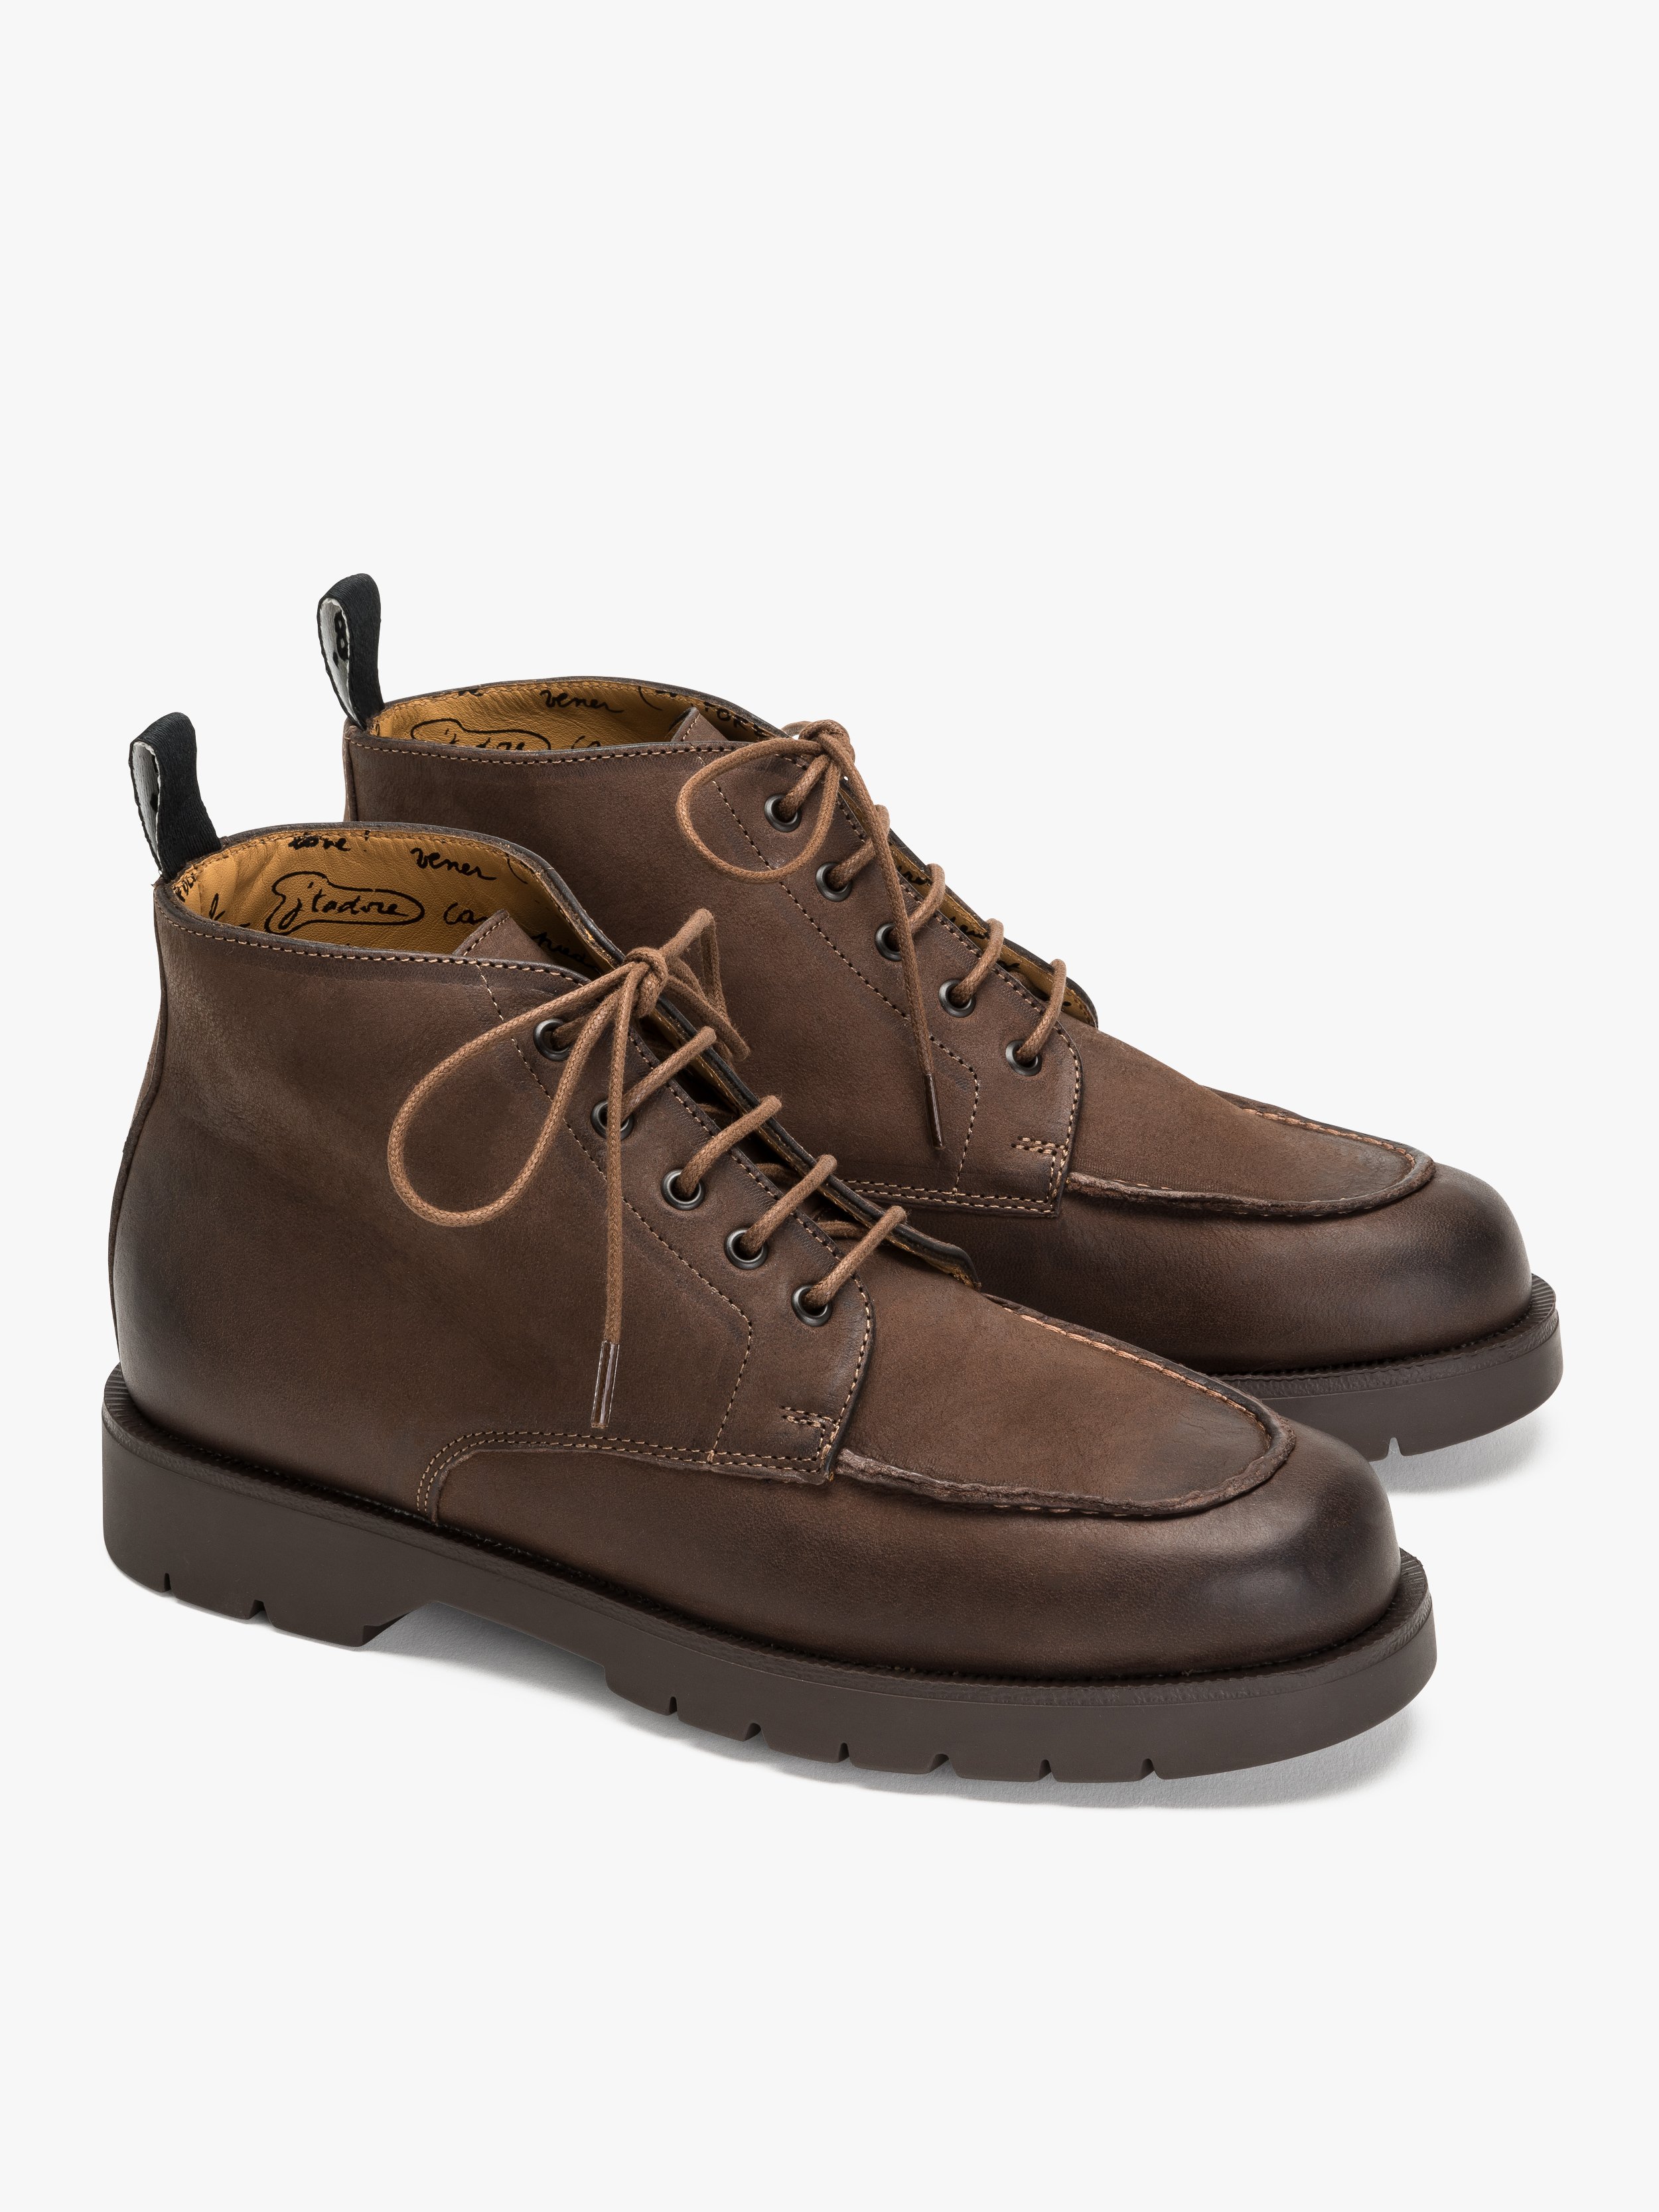 agnès b. x Kleman brown leather boots | agnès b.